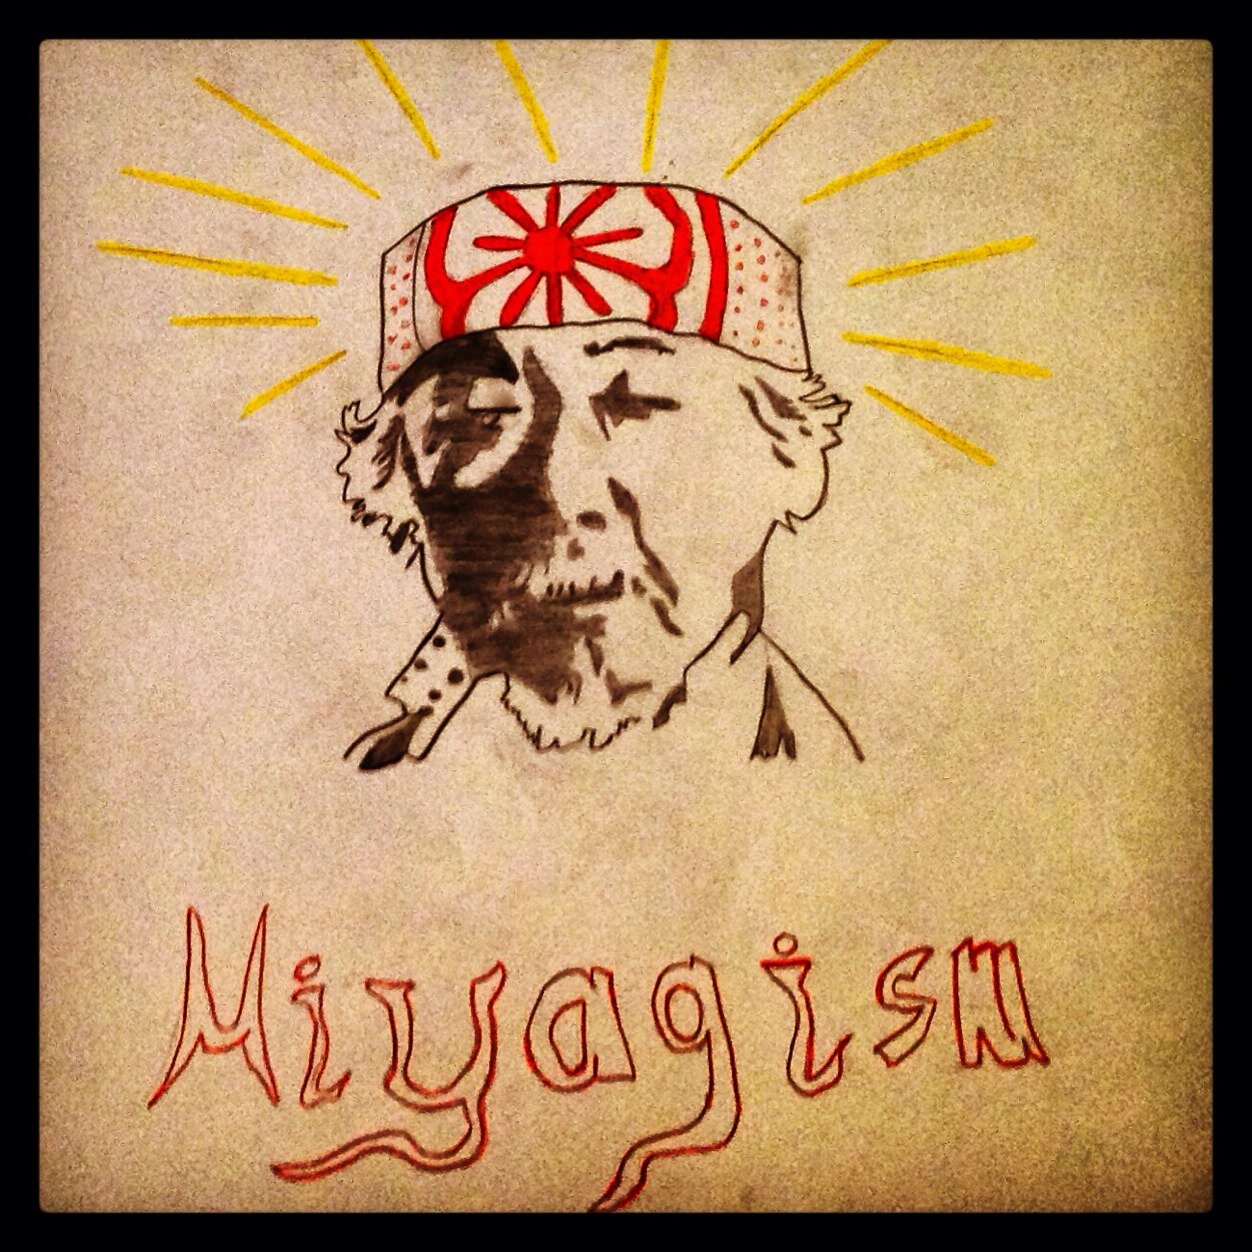 Miyagsim is a religion based on the teachings of the great Miyagi